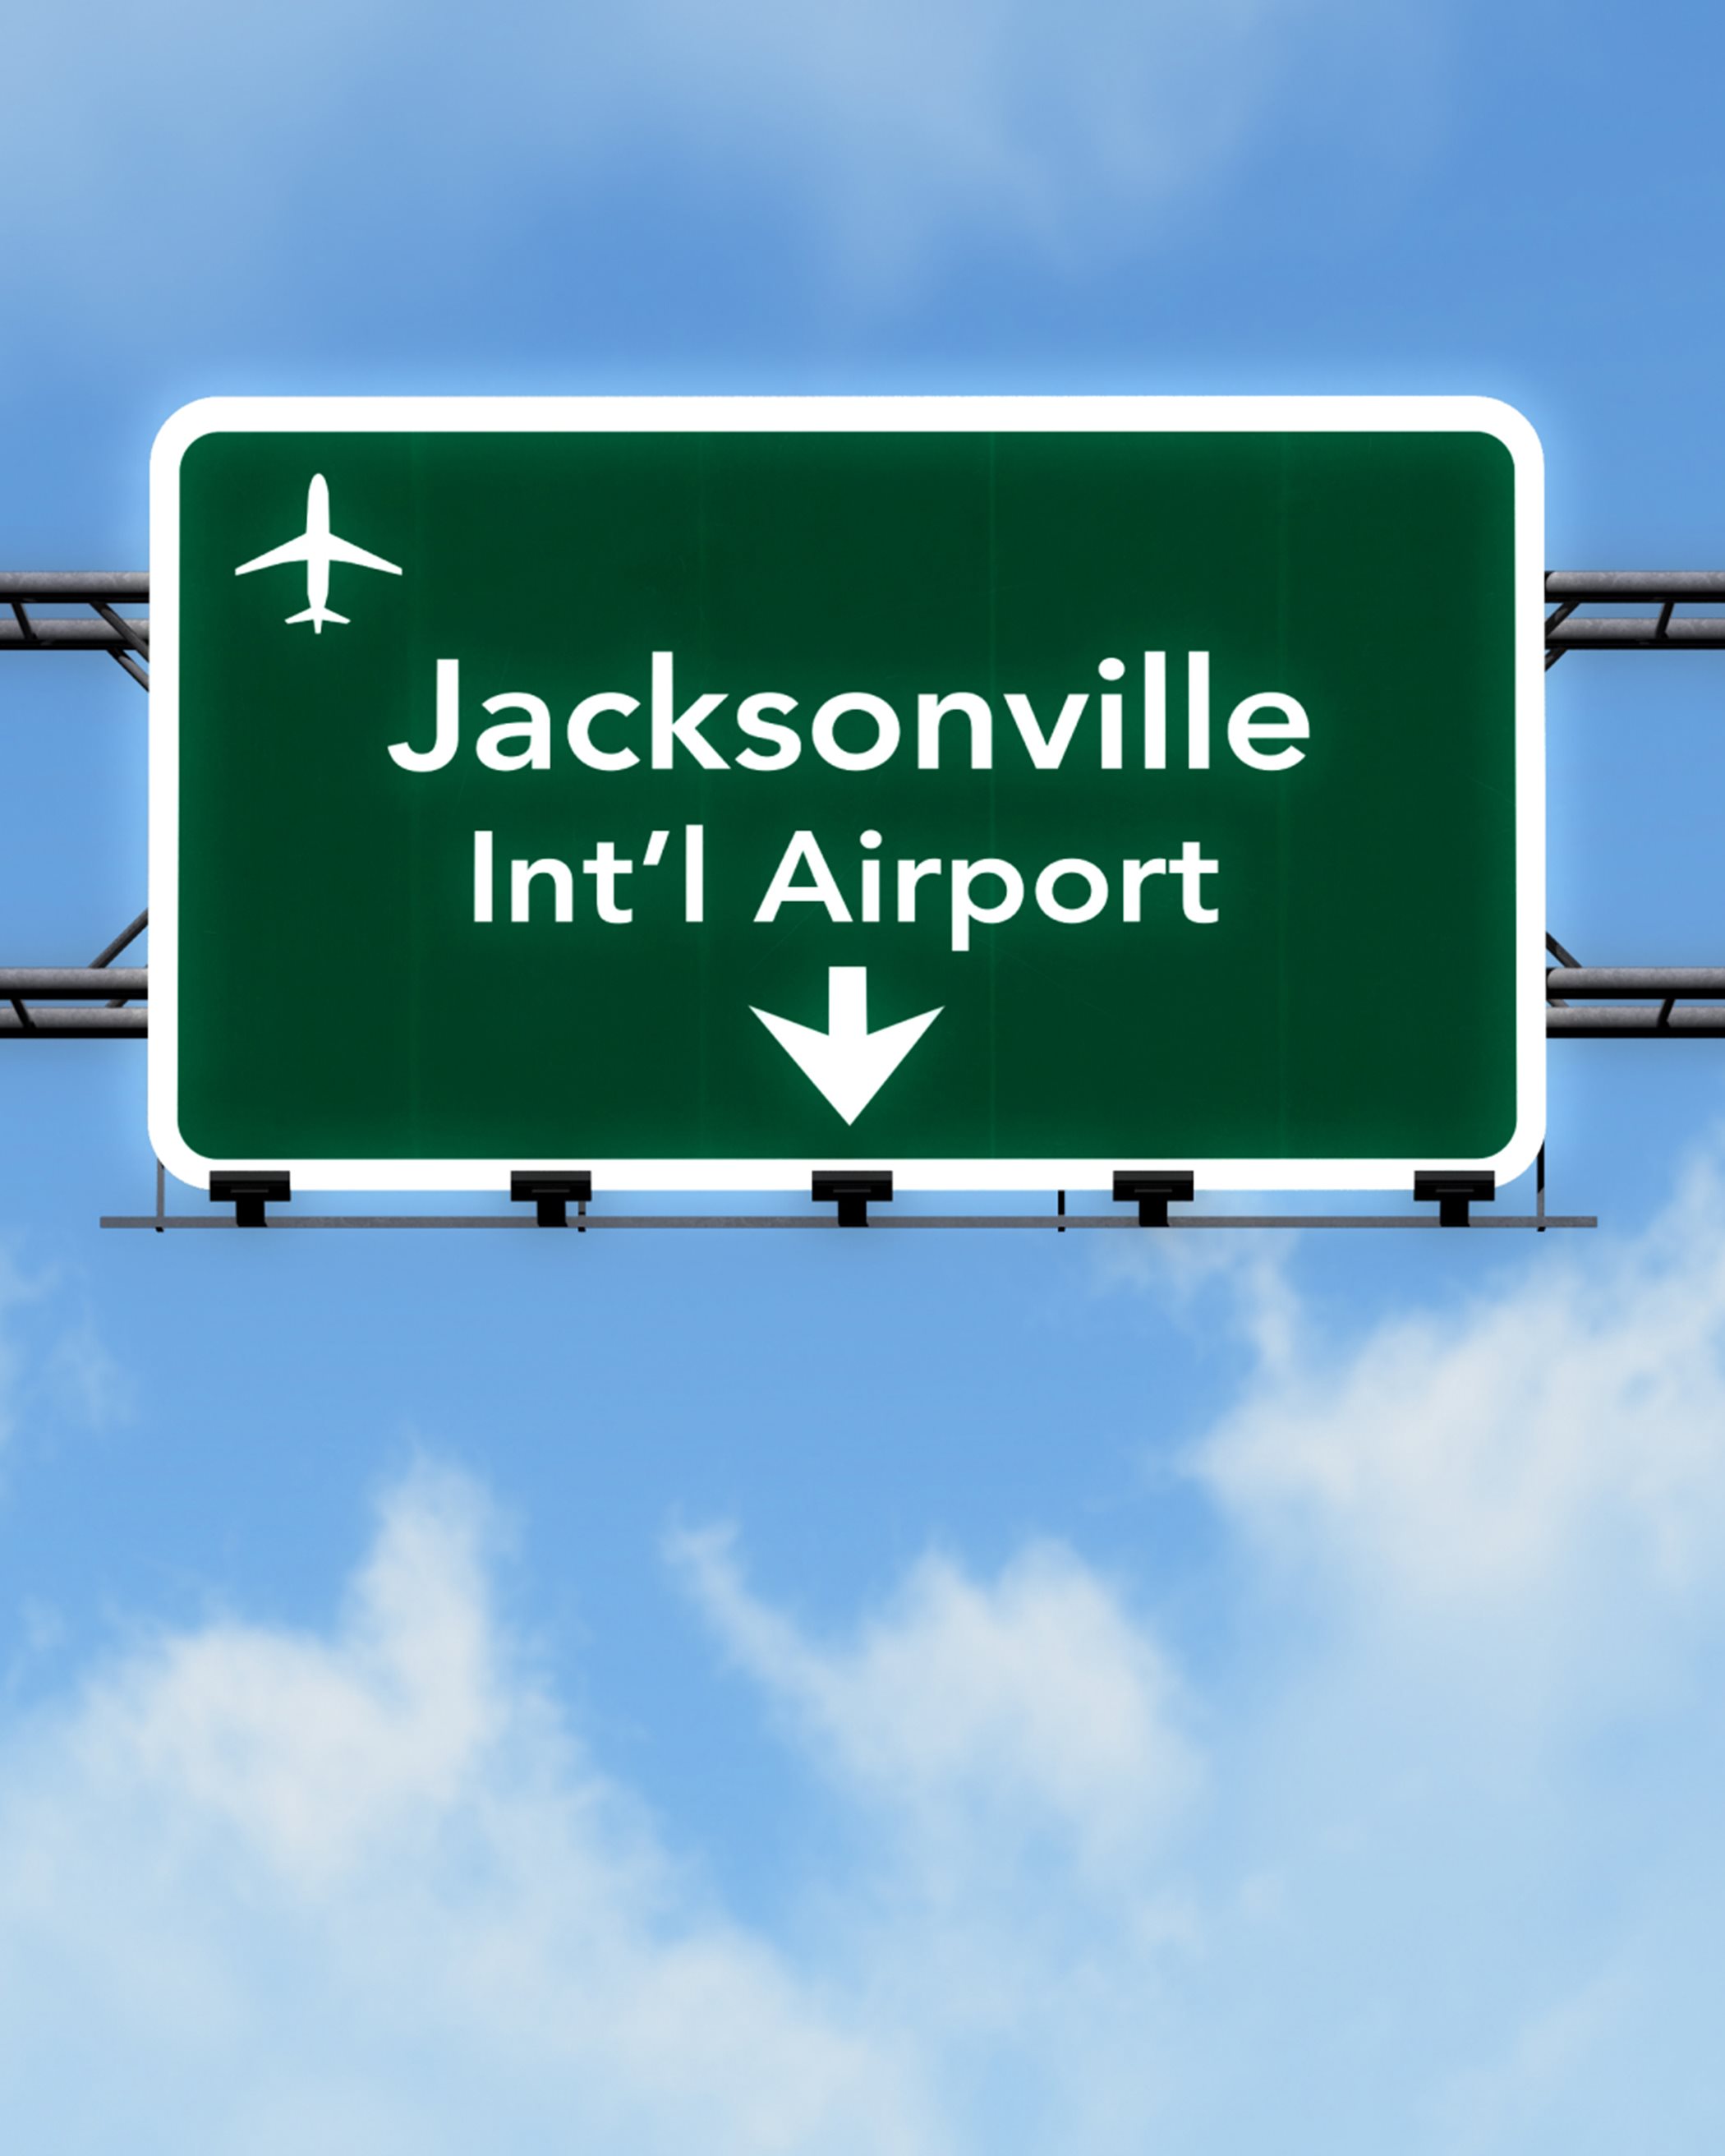 Airport freeway sign